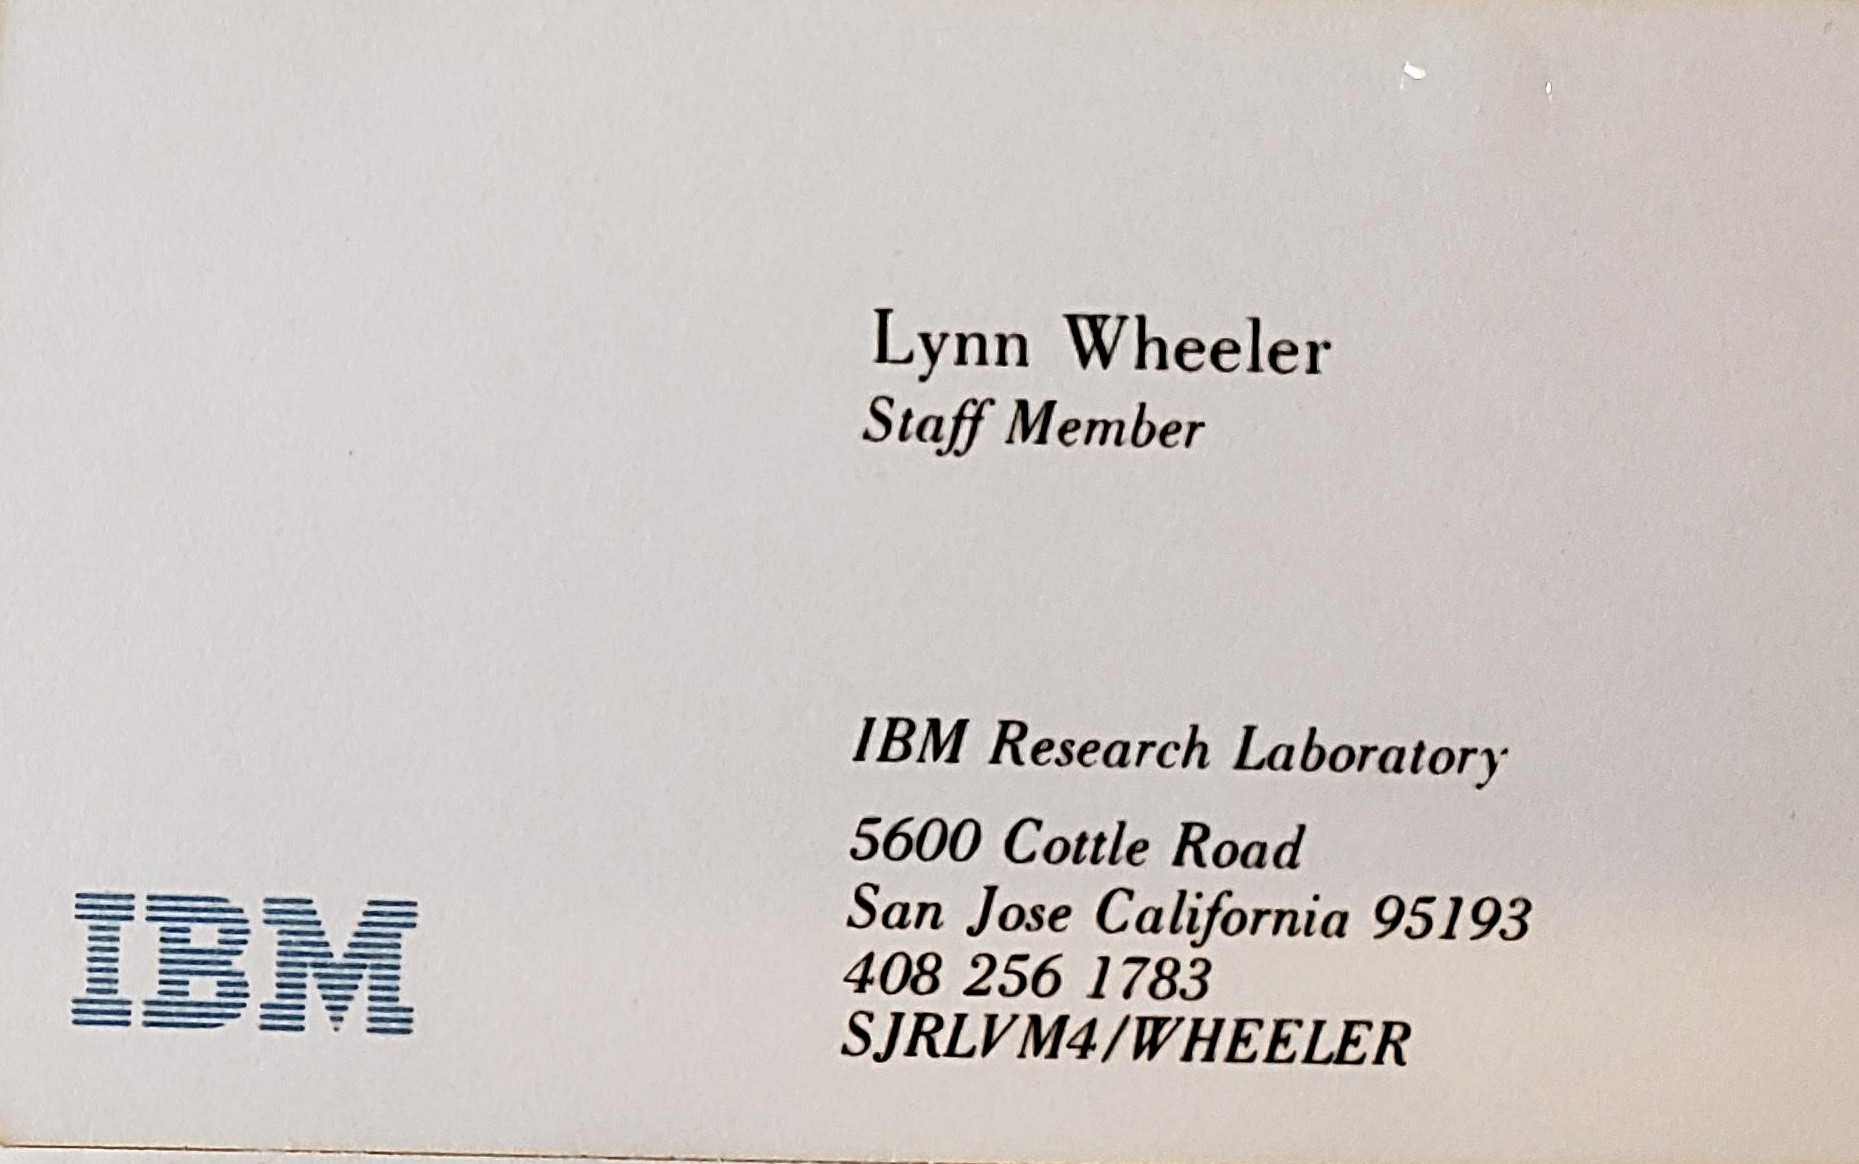 SJRL IBM business card